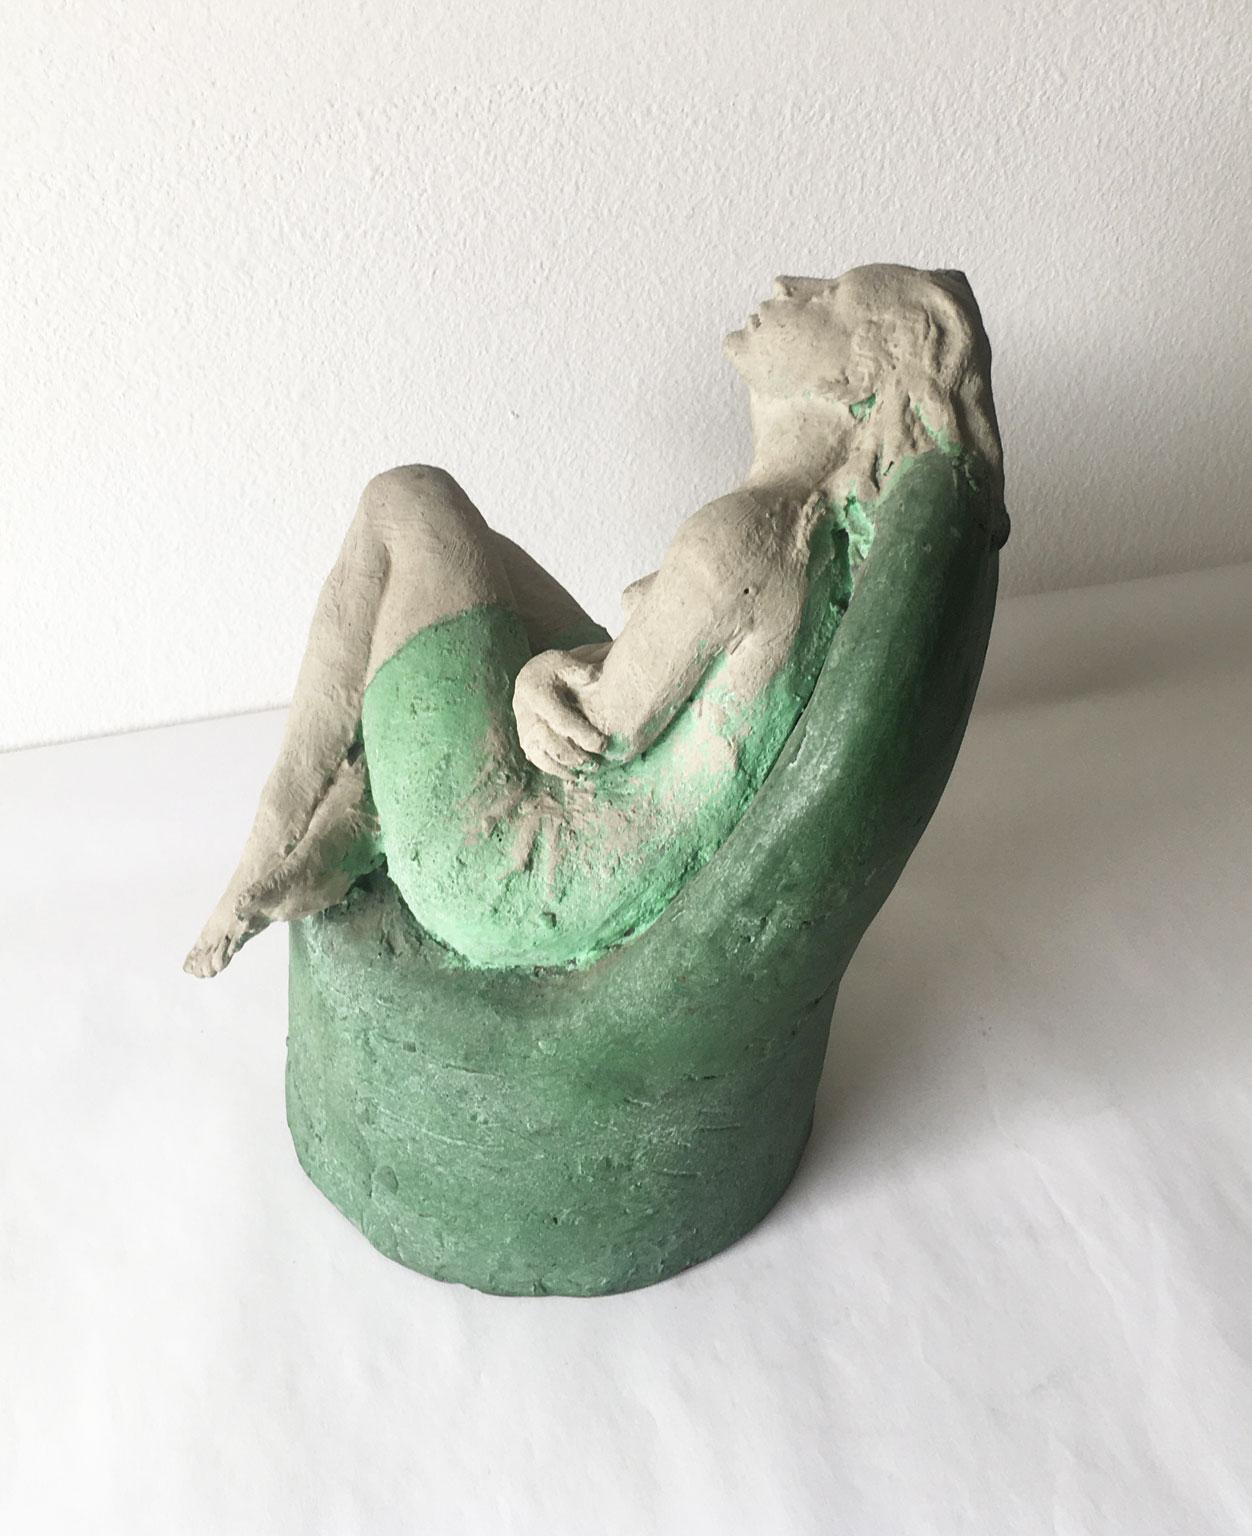 1998 Italy Bronze Woman Figurine Sculpture by Marco Cornini Attesa For Sale 5